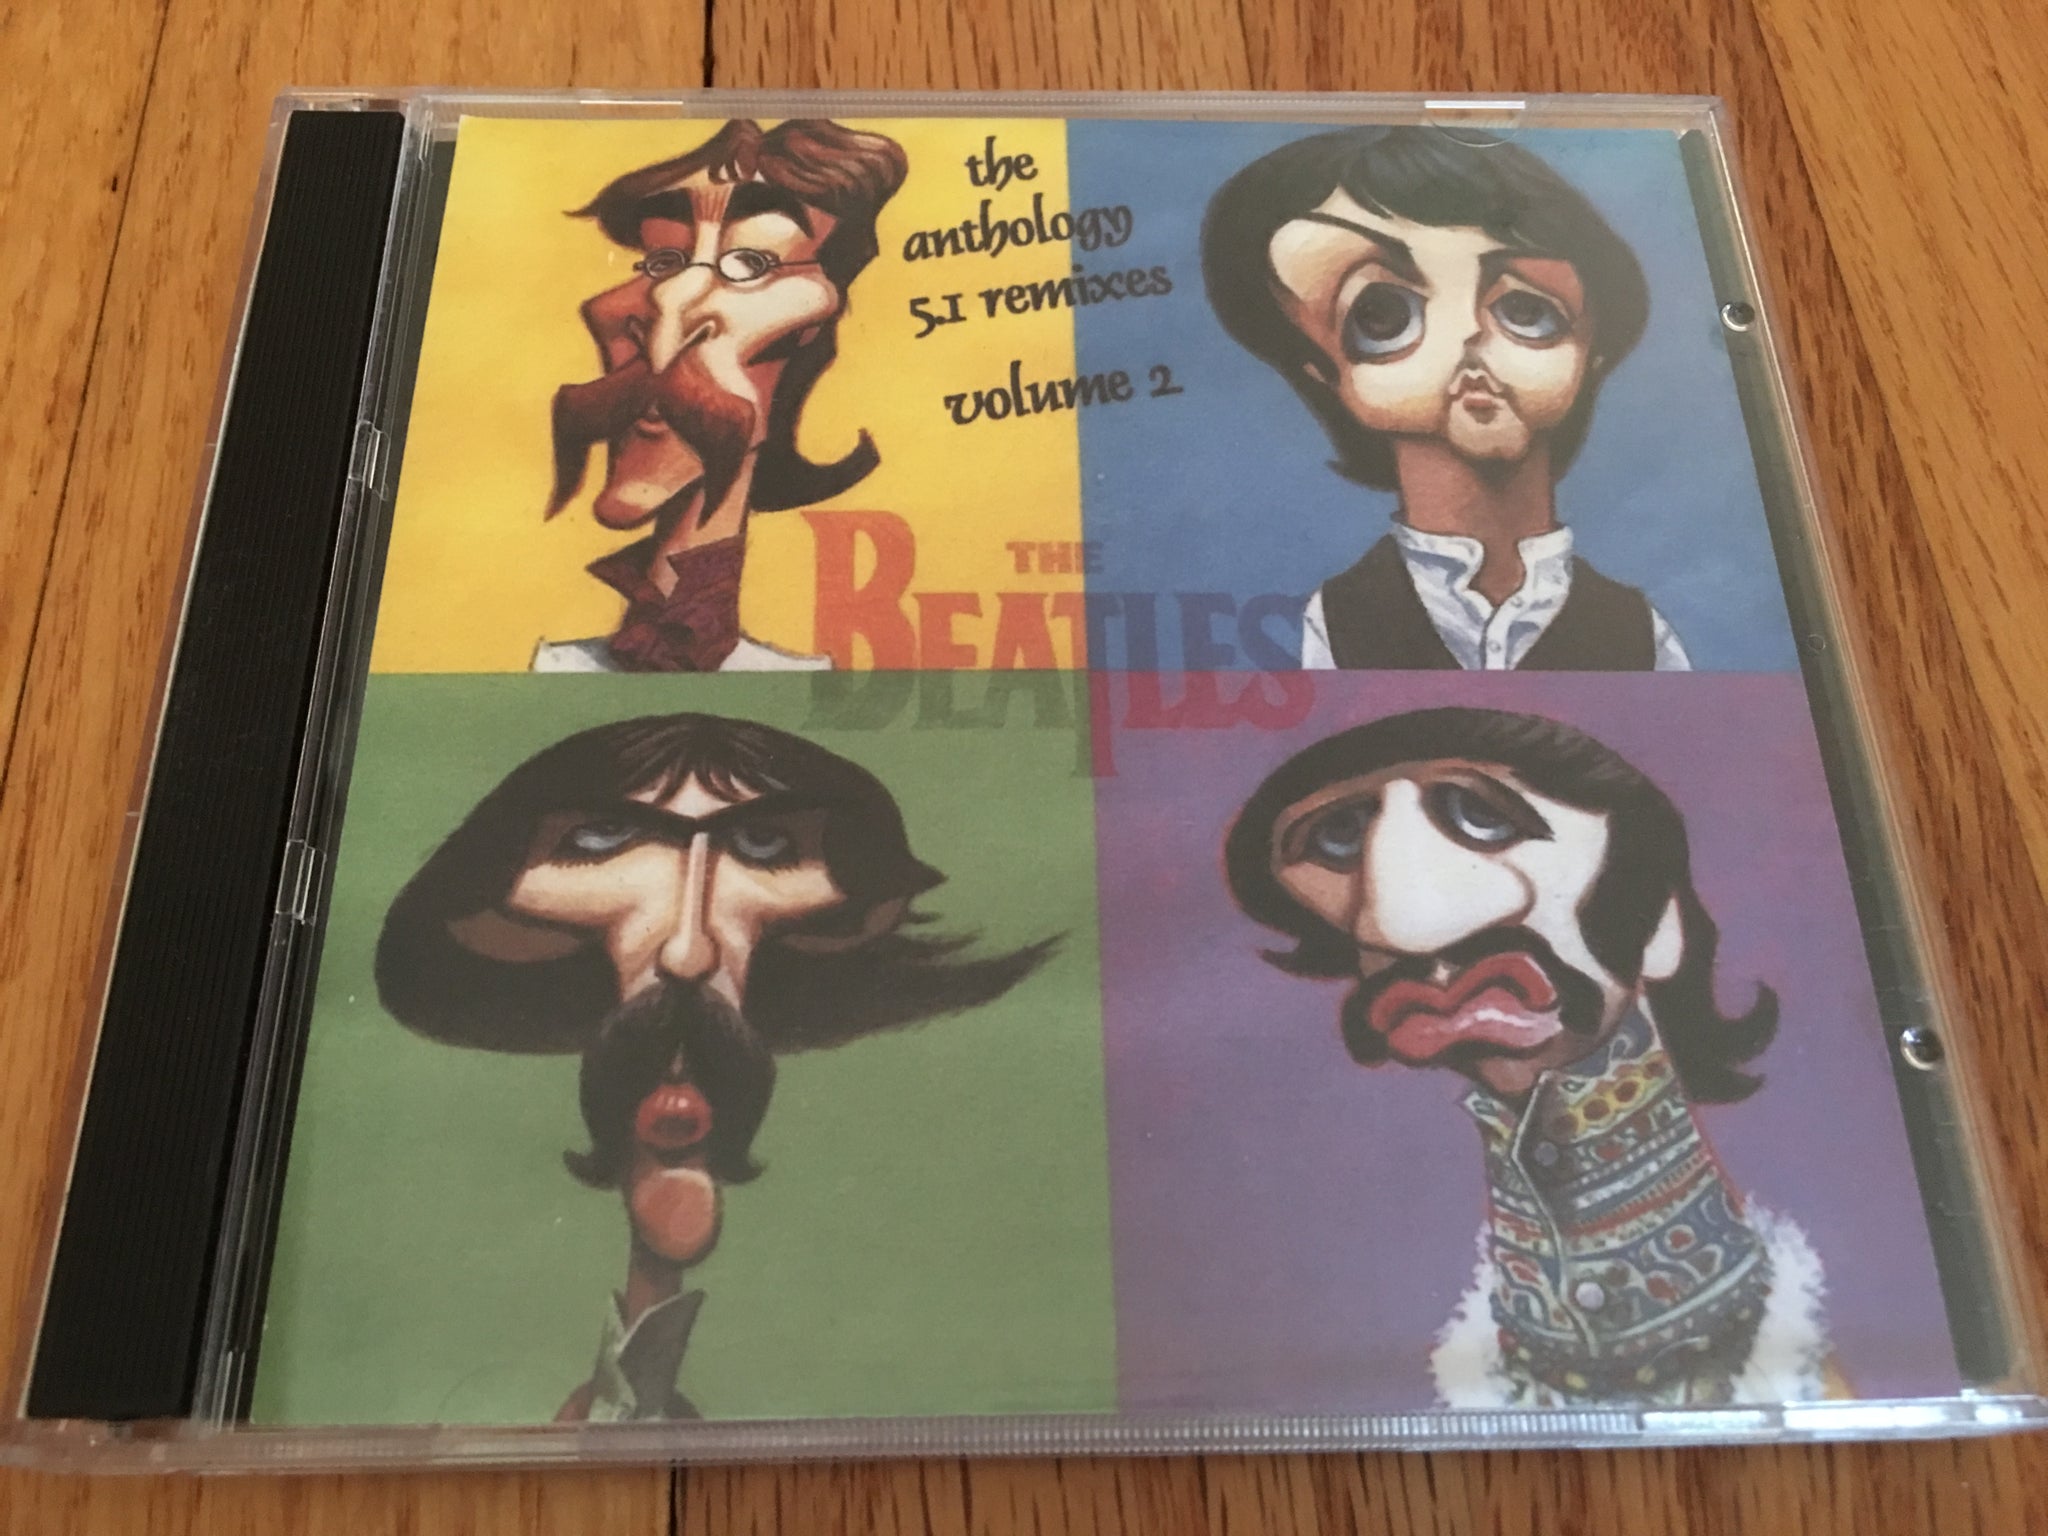 The Beatles Anthology 5 1 Remixes Vol 2 Imaginemystic Com